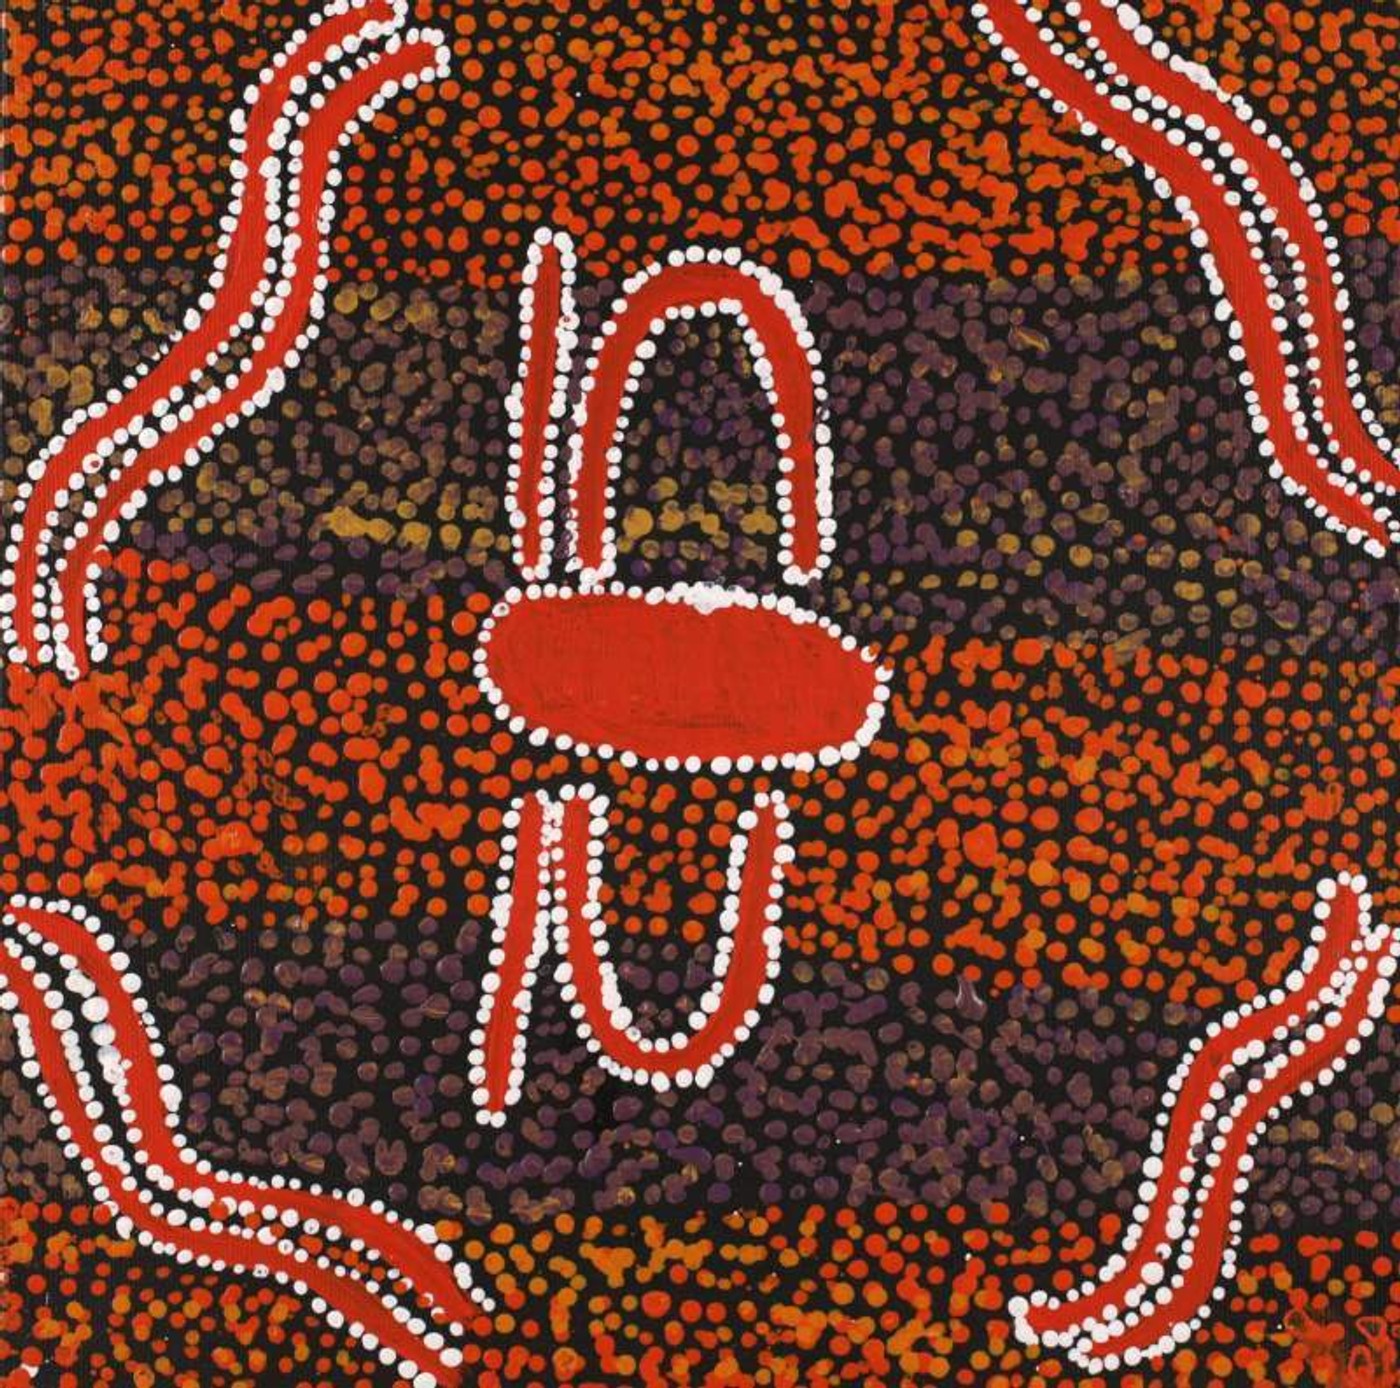 Ngarlajiyi Jukurrpa (Bush Carrot Dreaming) by Audrey Nungarrayi Brown